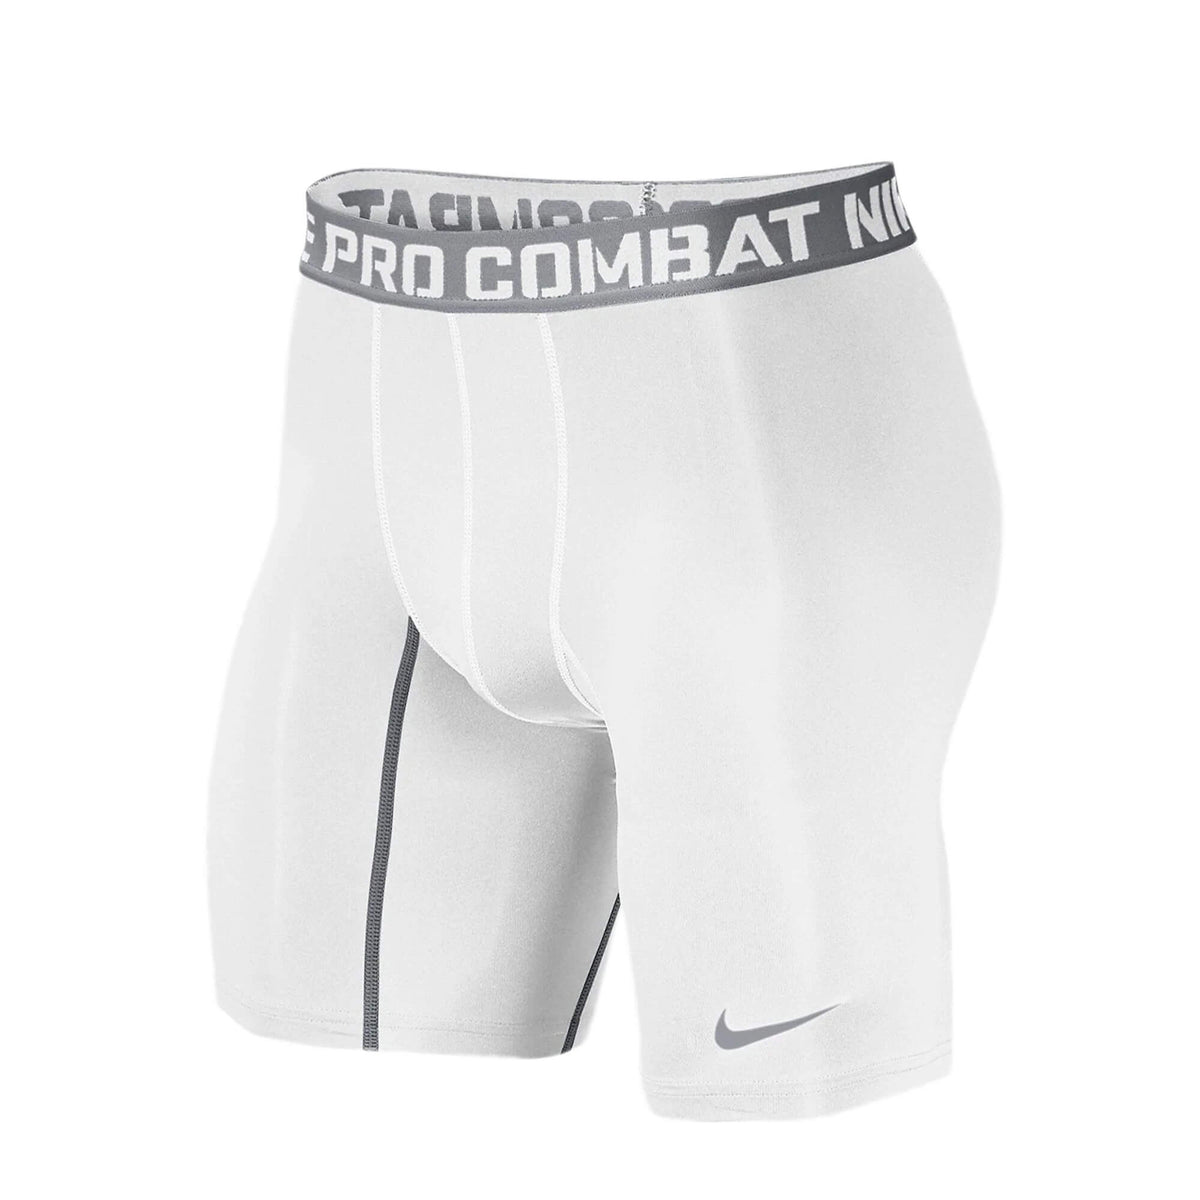 Men's Pro Combat Tights Shorts White/Grey Azteca Soccer